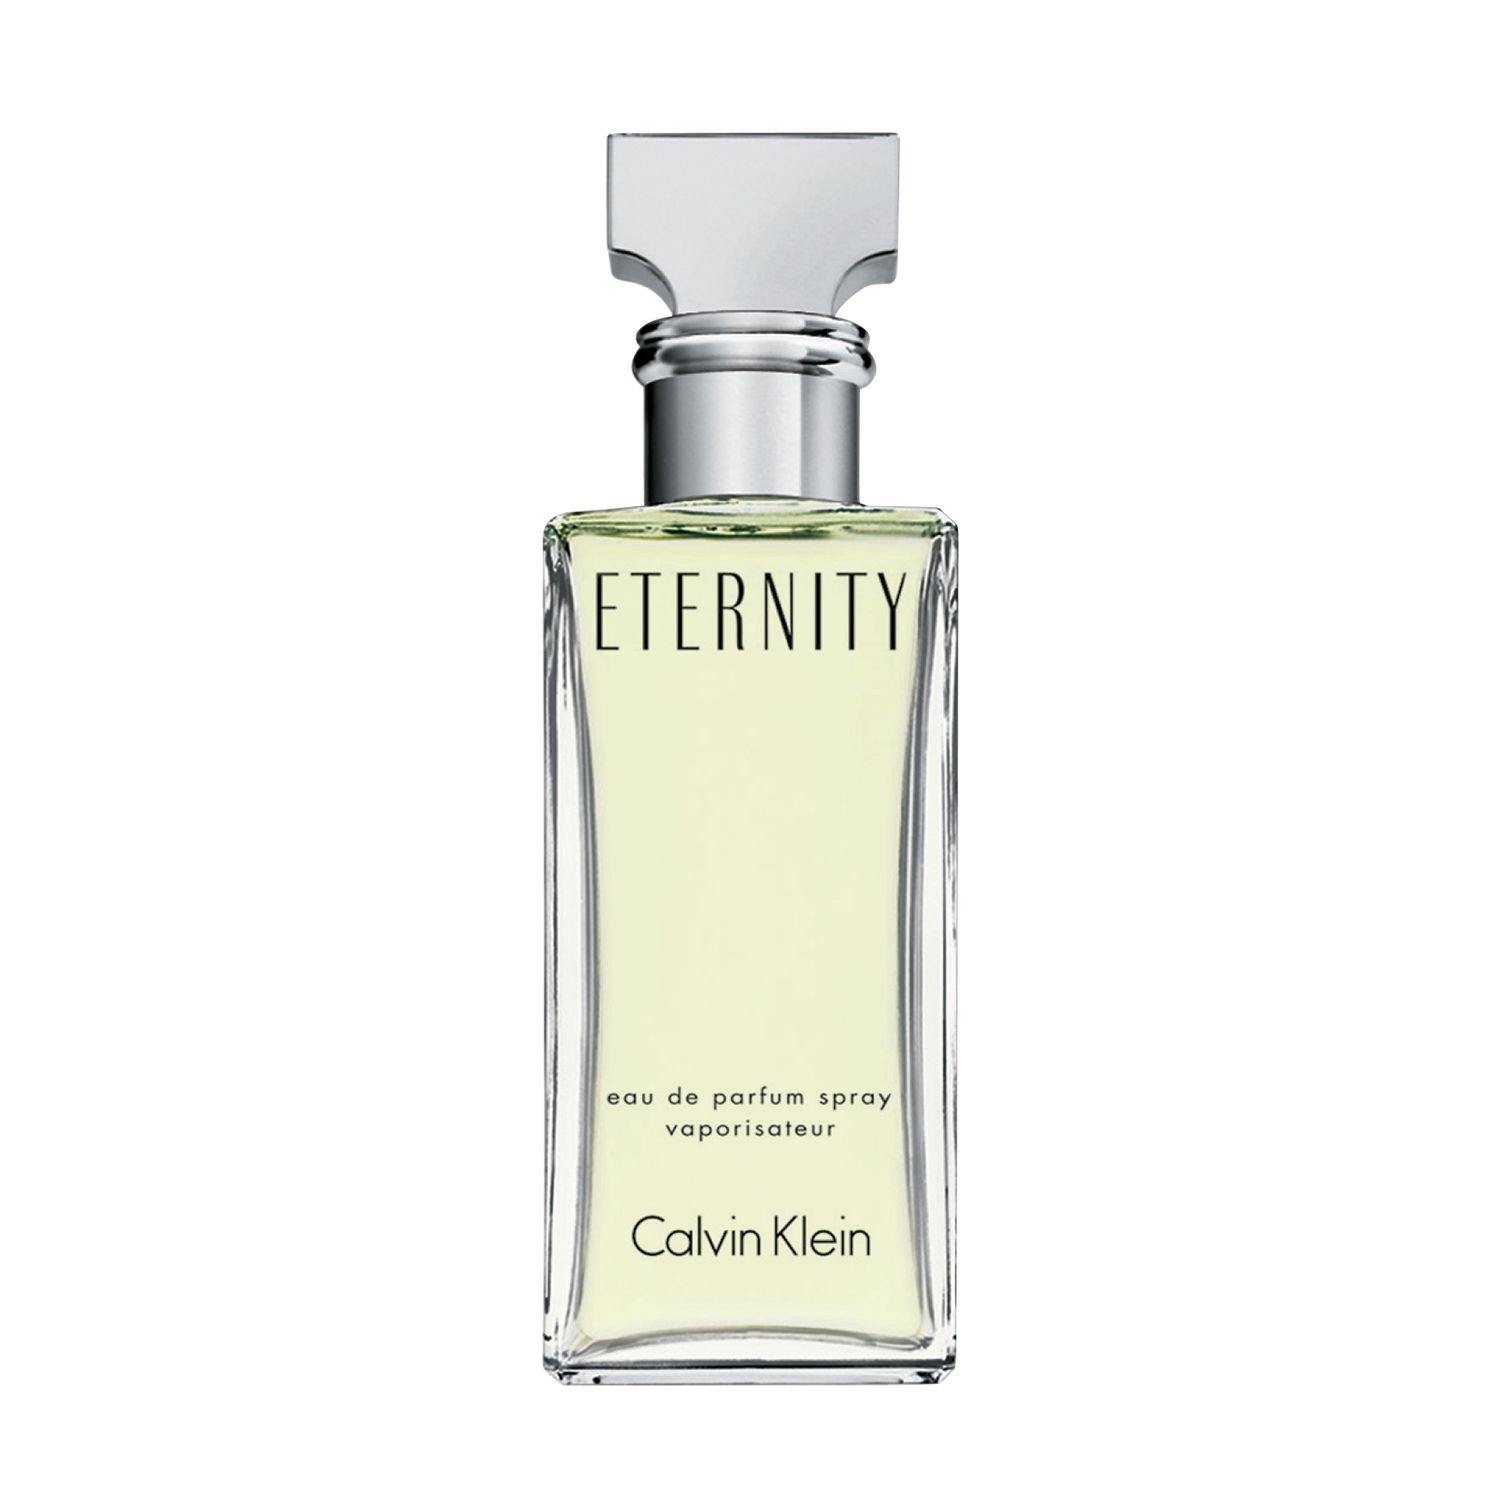 eternity perfume for women